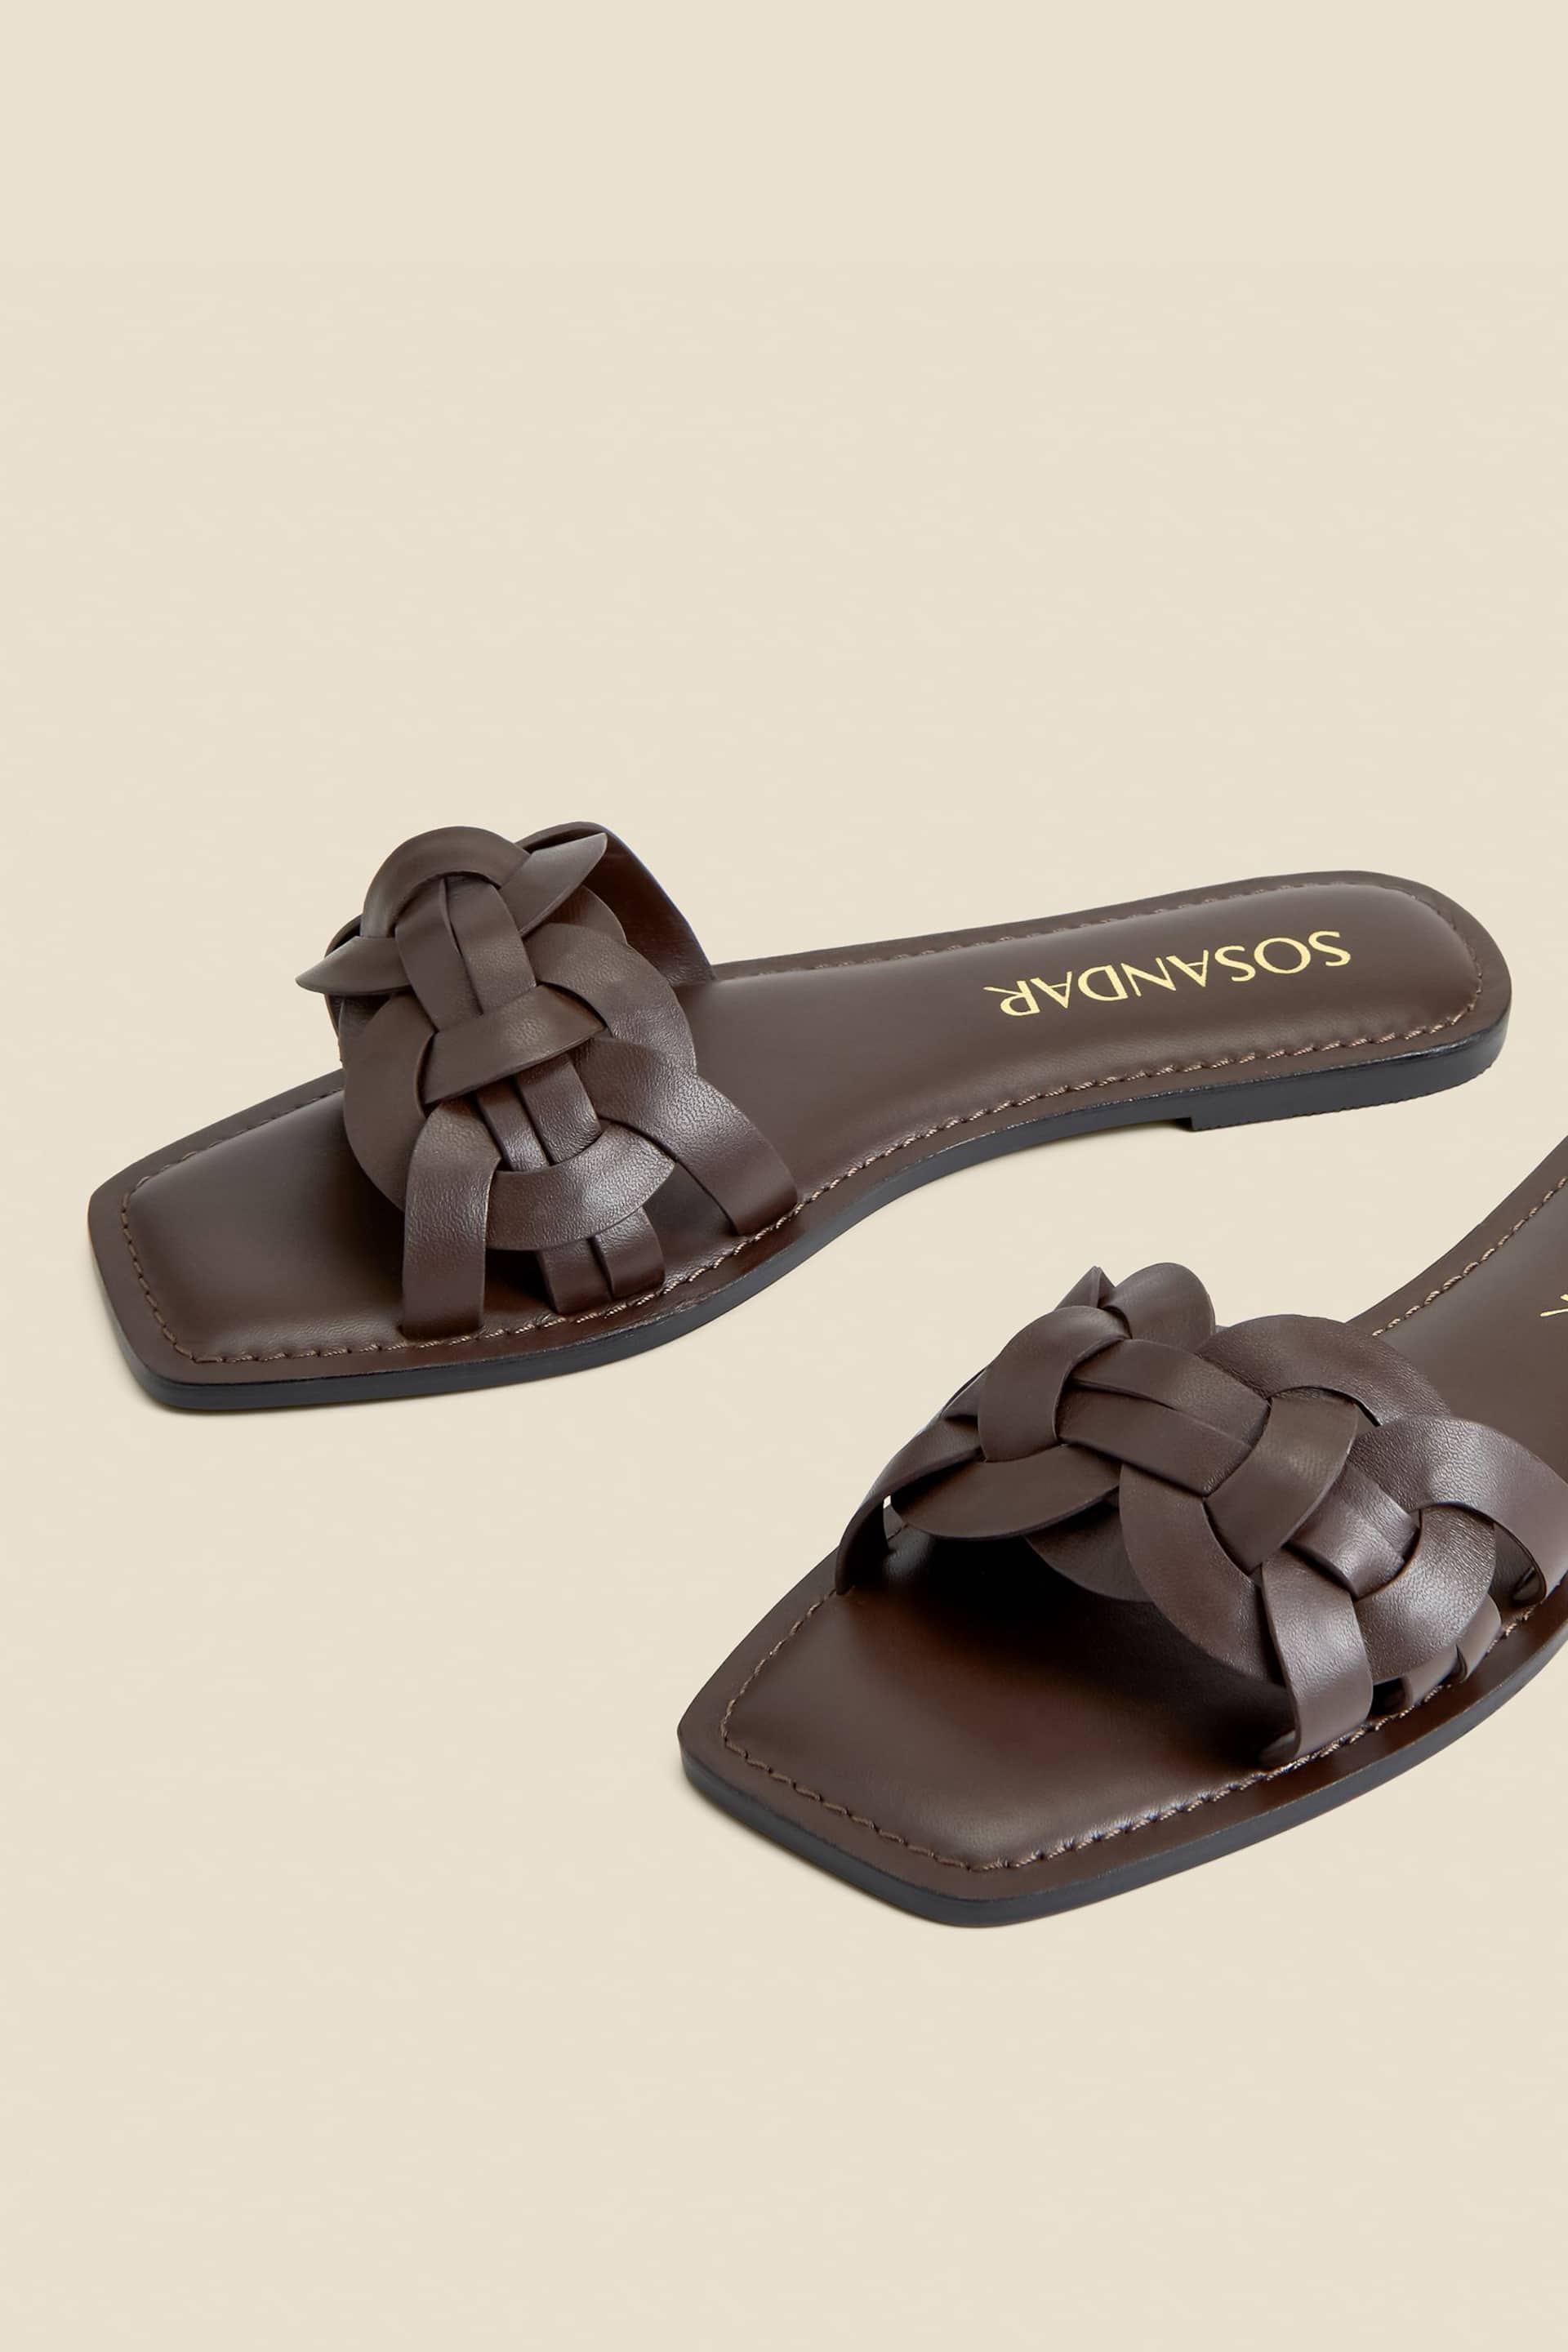 Sosandar Brown Leather Woven Strap Sandals - Image 3 of 3